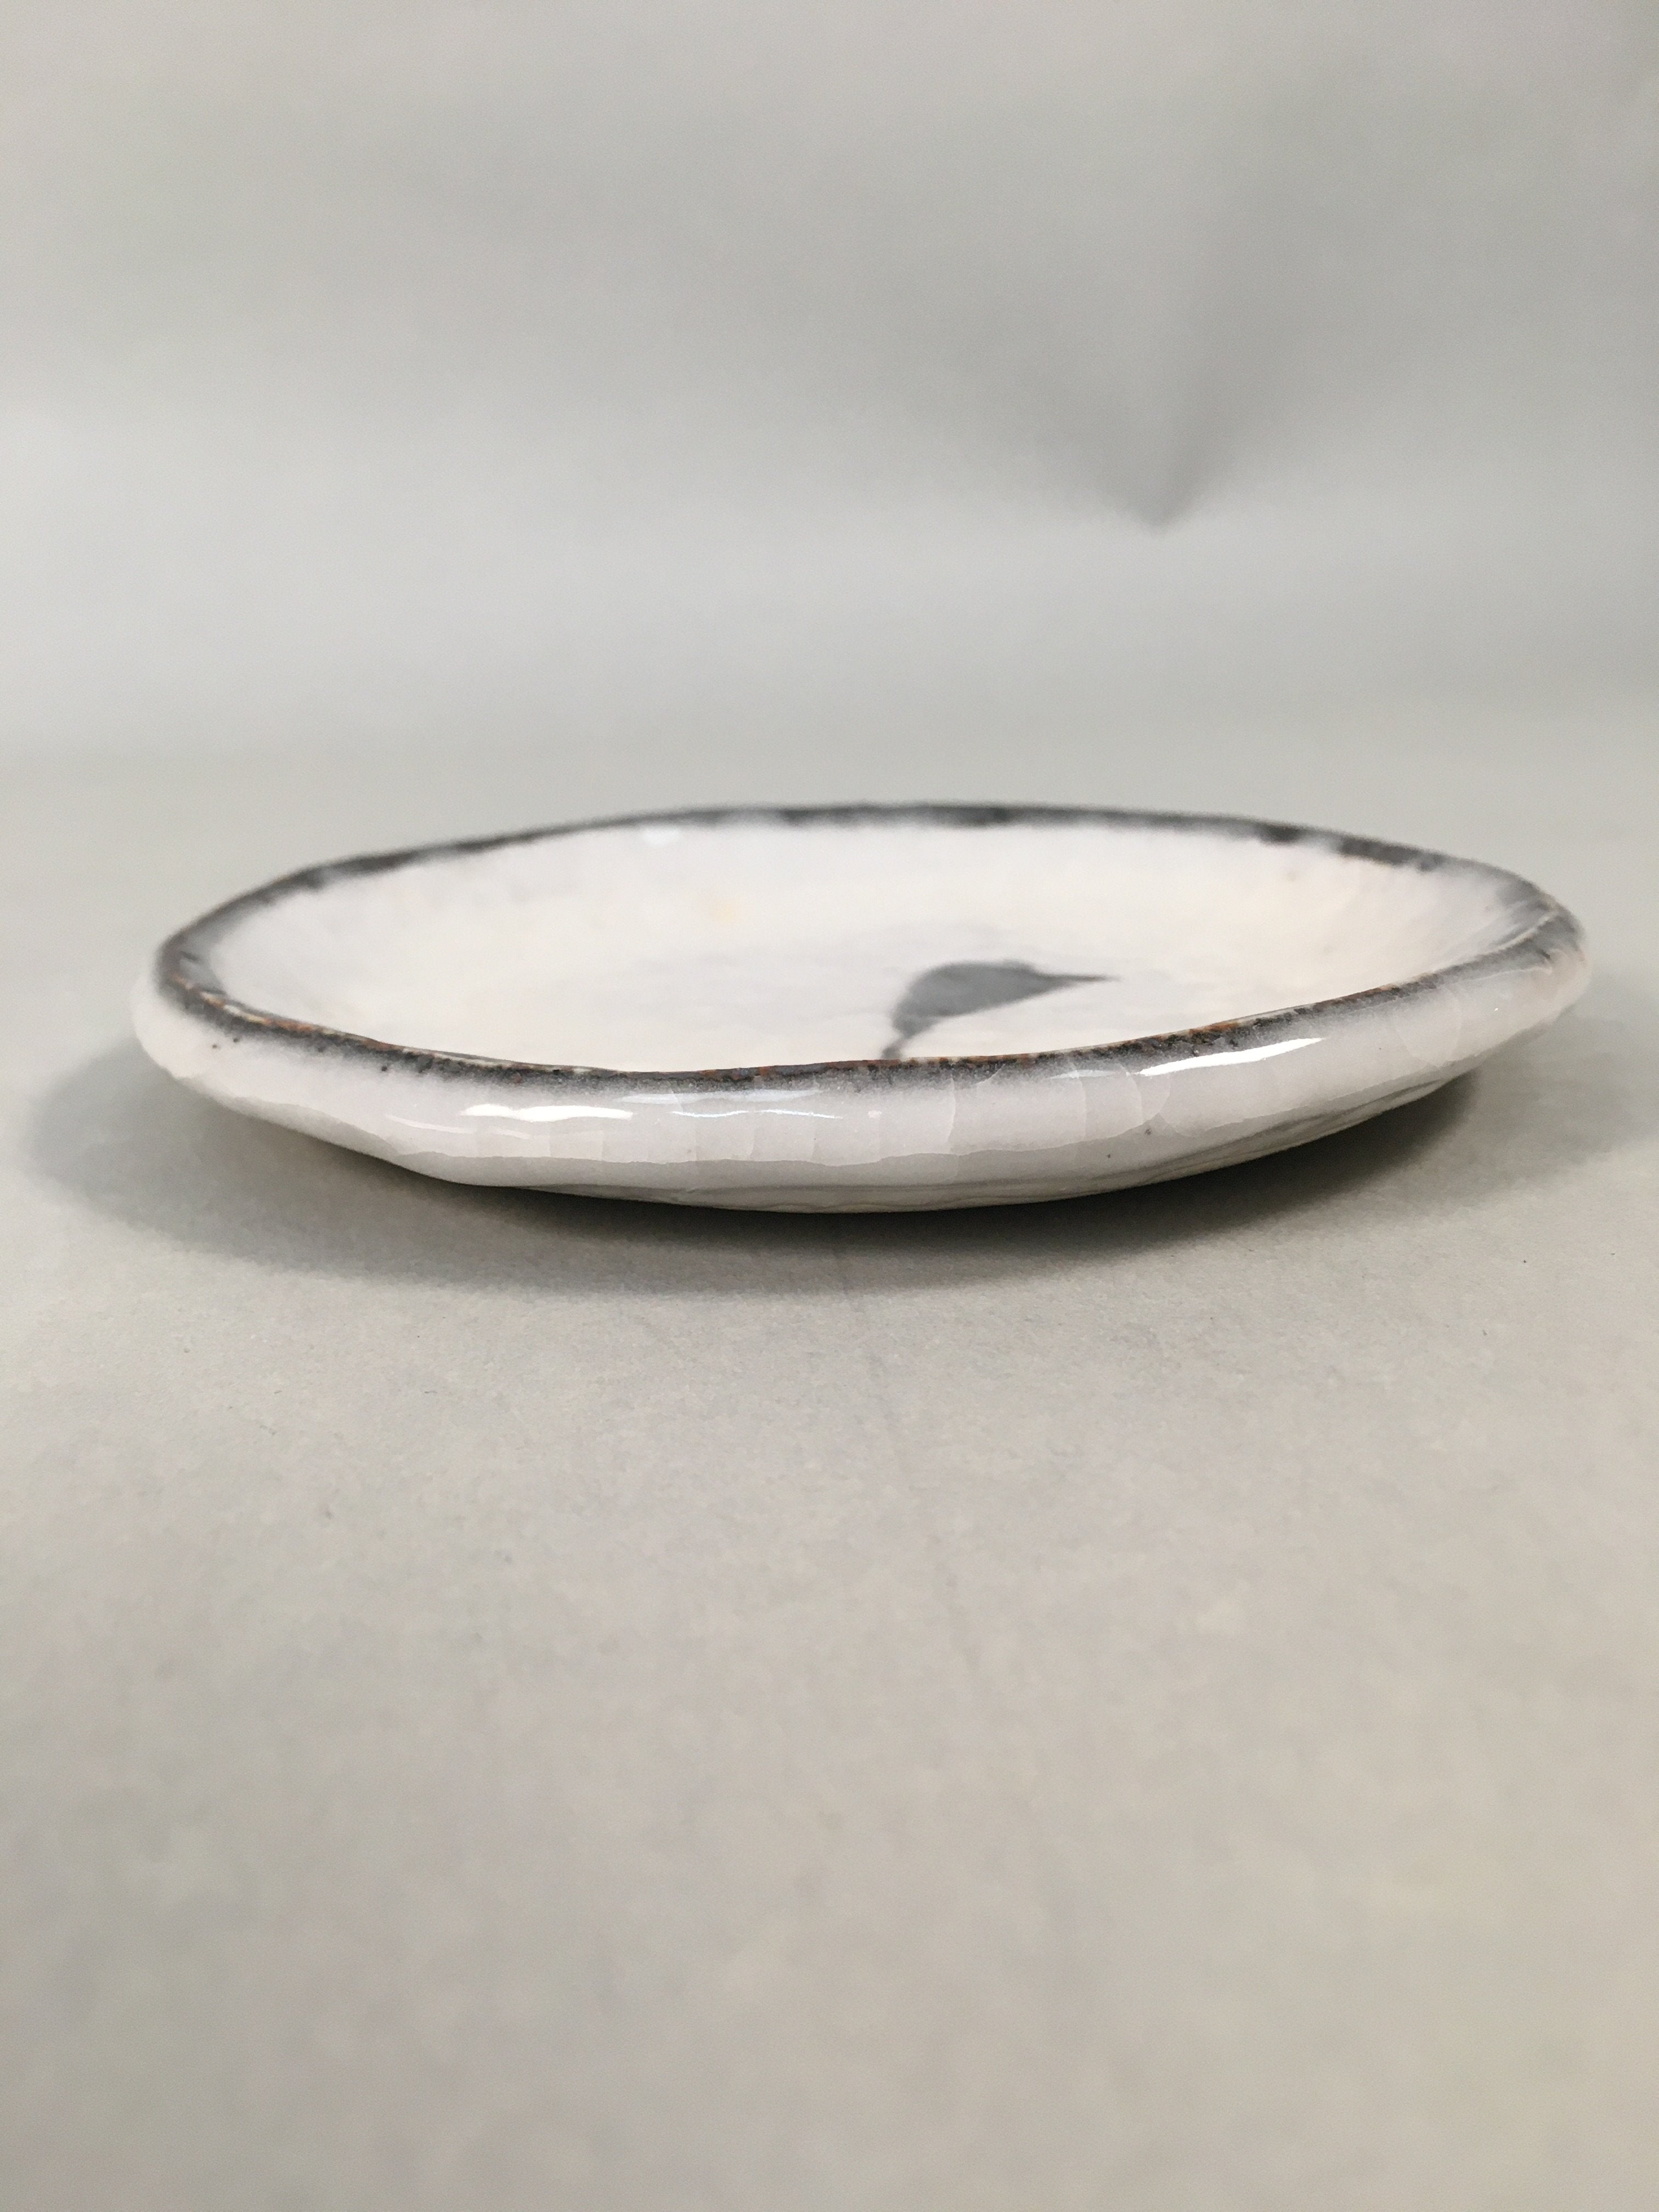 Japanese Ceramic Small Plate Shino Kozara Vtg Round Pottery White Gray PP448